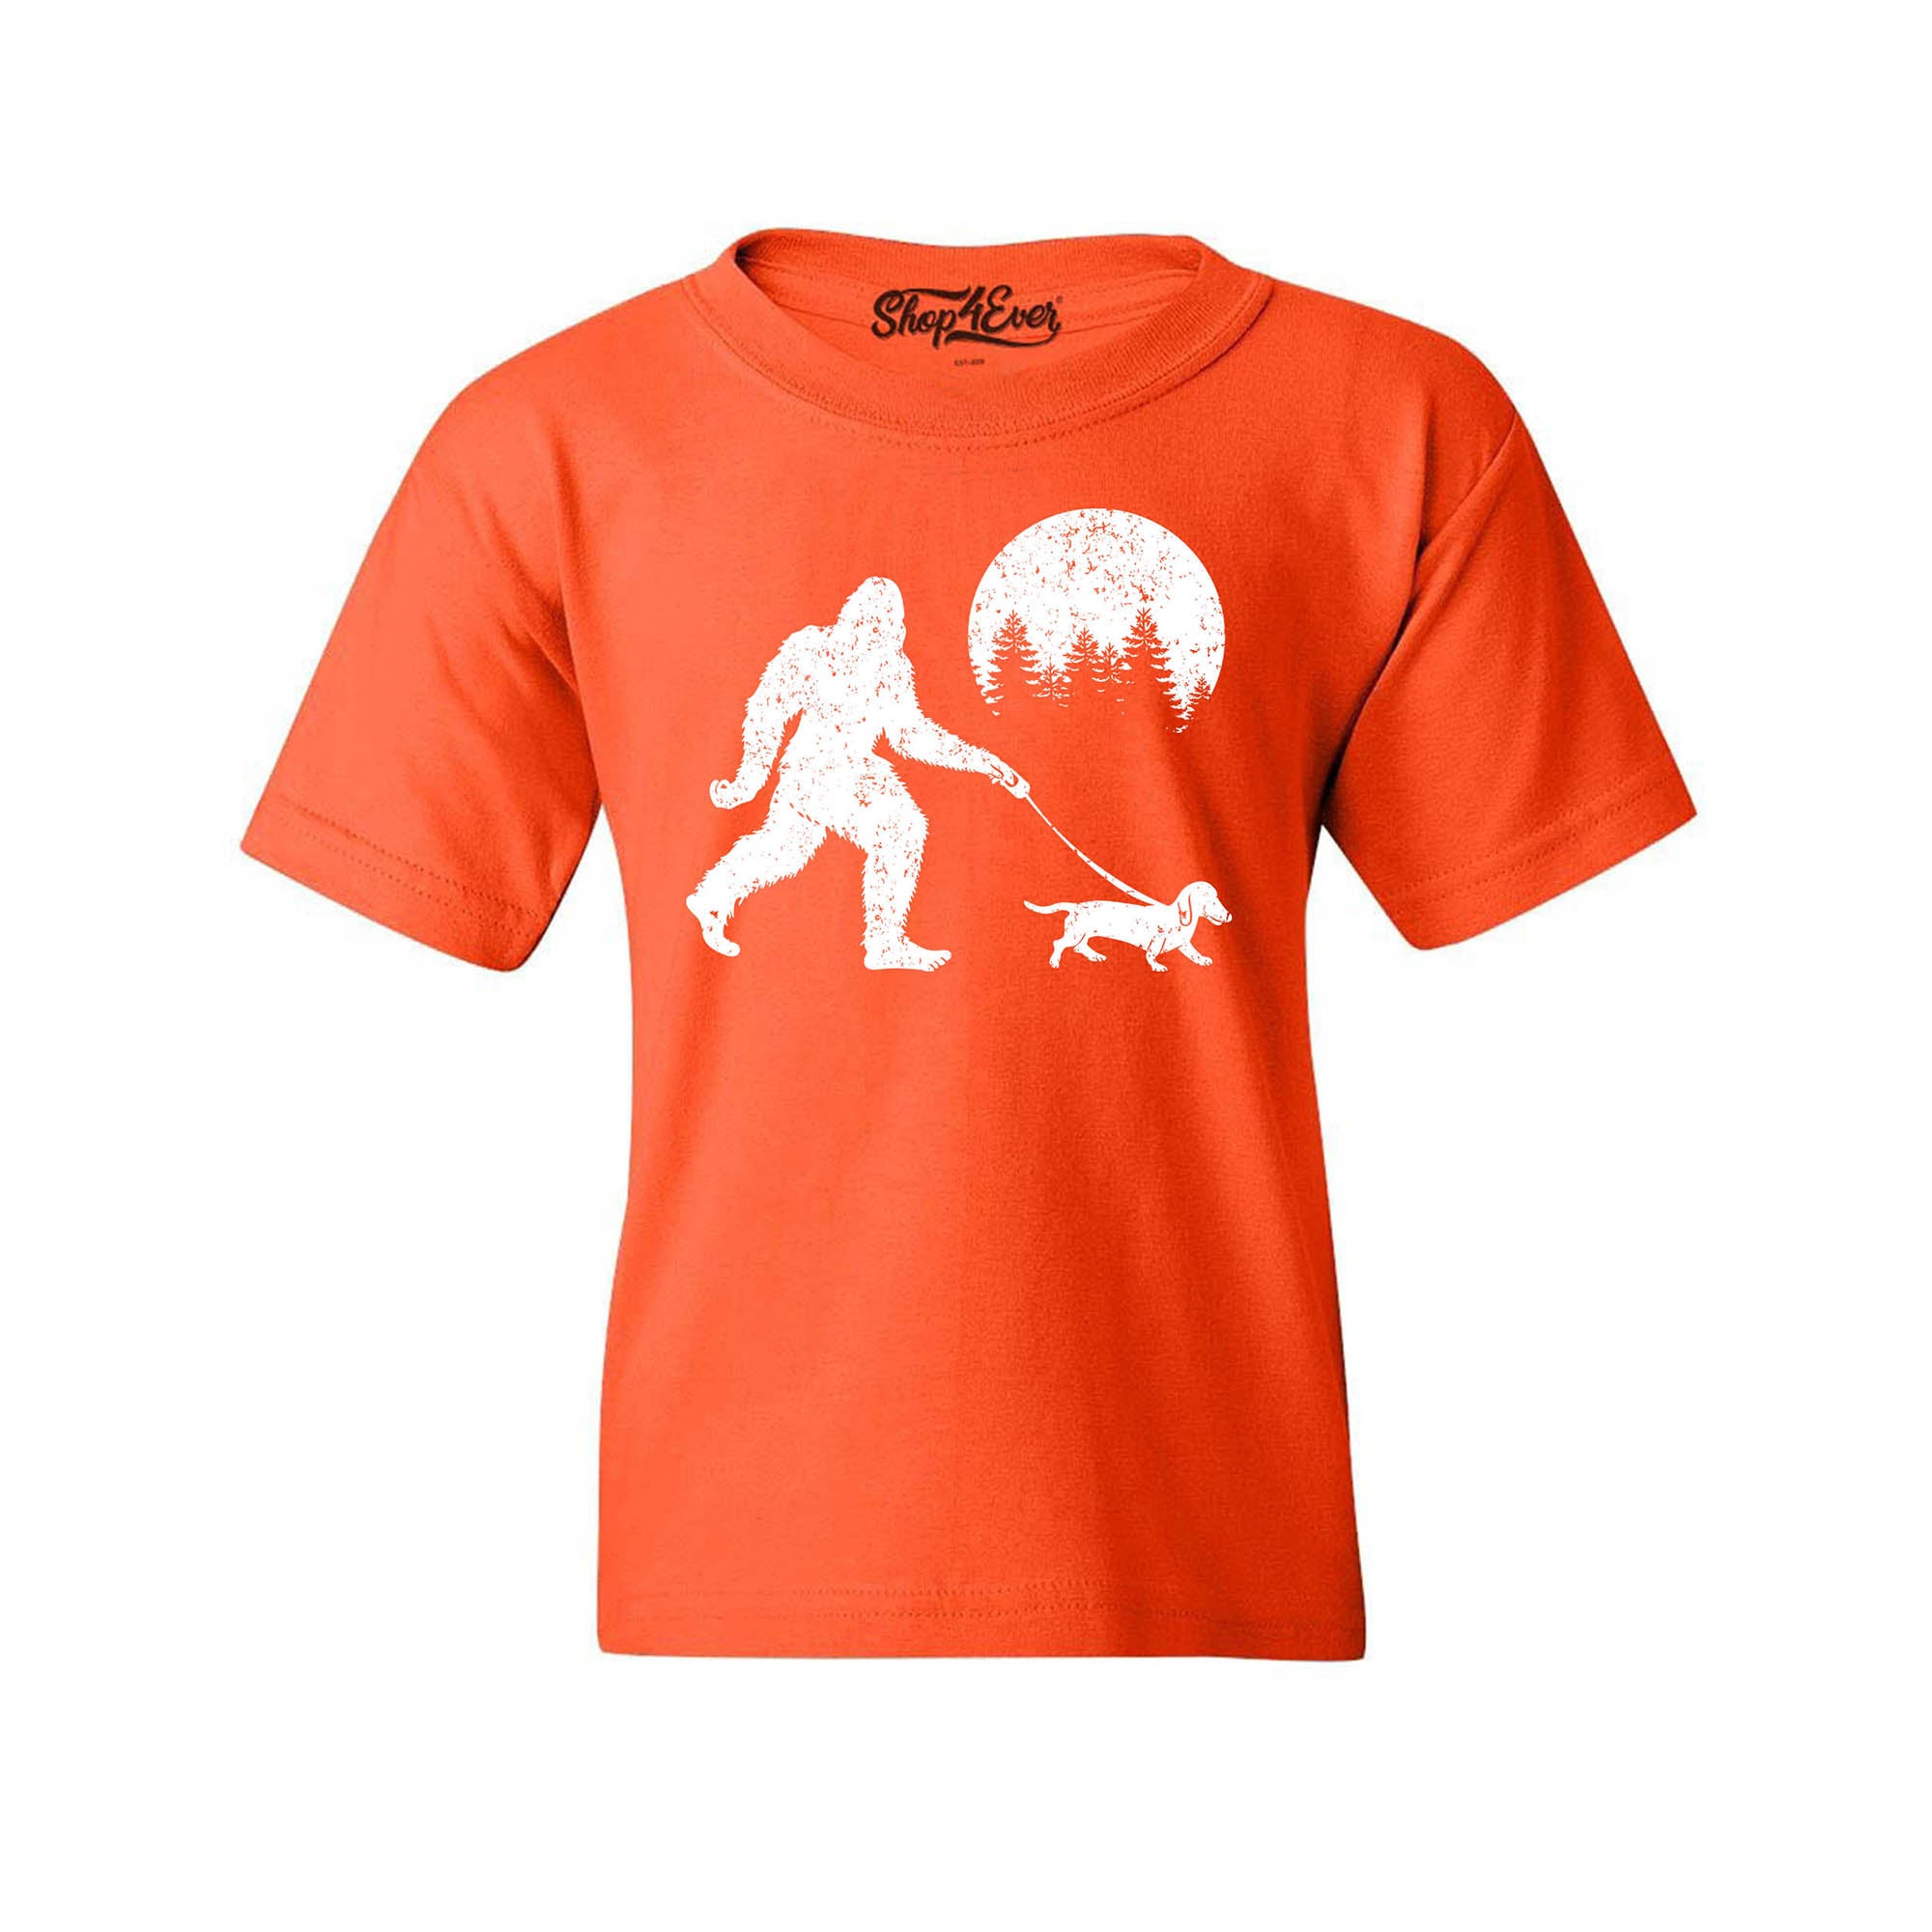 Bigfoot Walking Wiener Dog Funny Sasquatch Dachshund Youth's T-Shirt